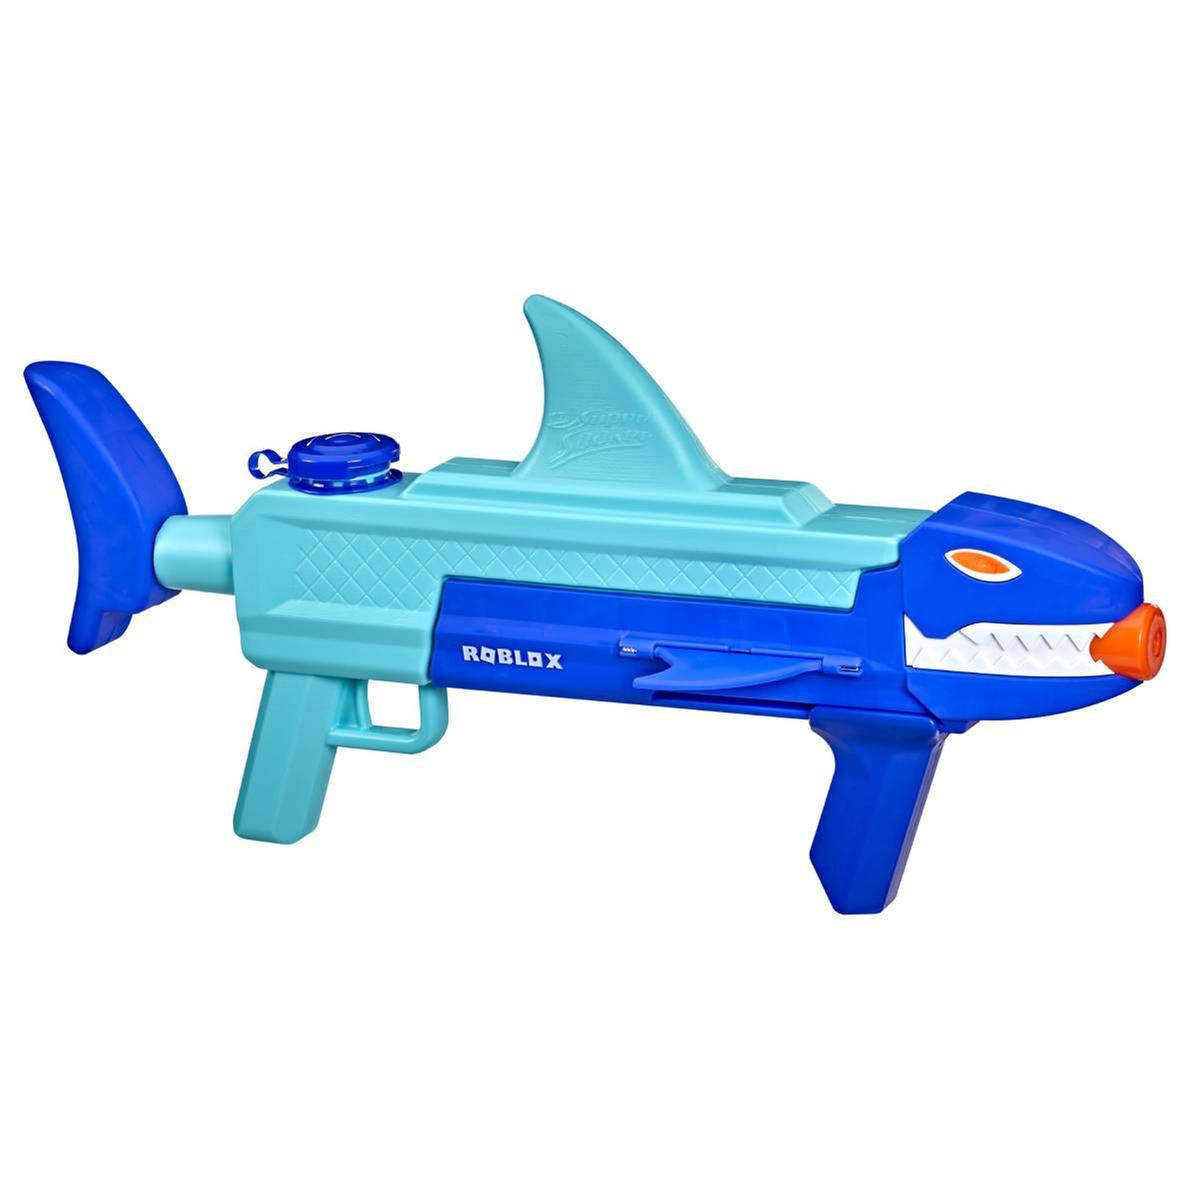 Nerf - Super Soaker Roblox SharkBite SHRK | Pistolas De Agua | Toys"R"Us  España